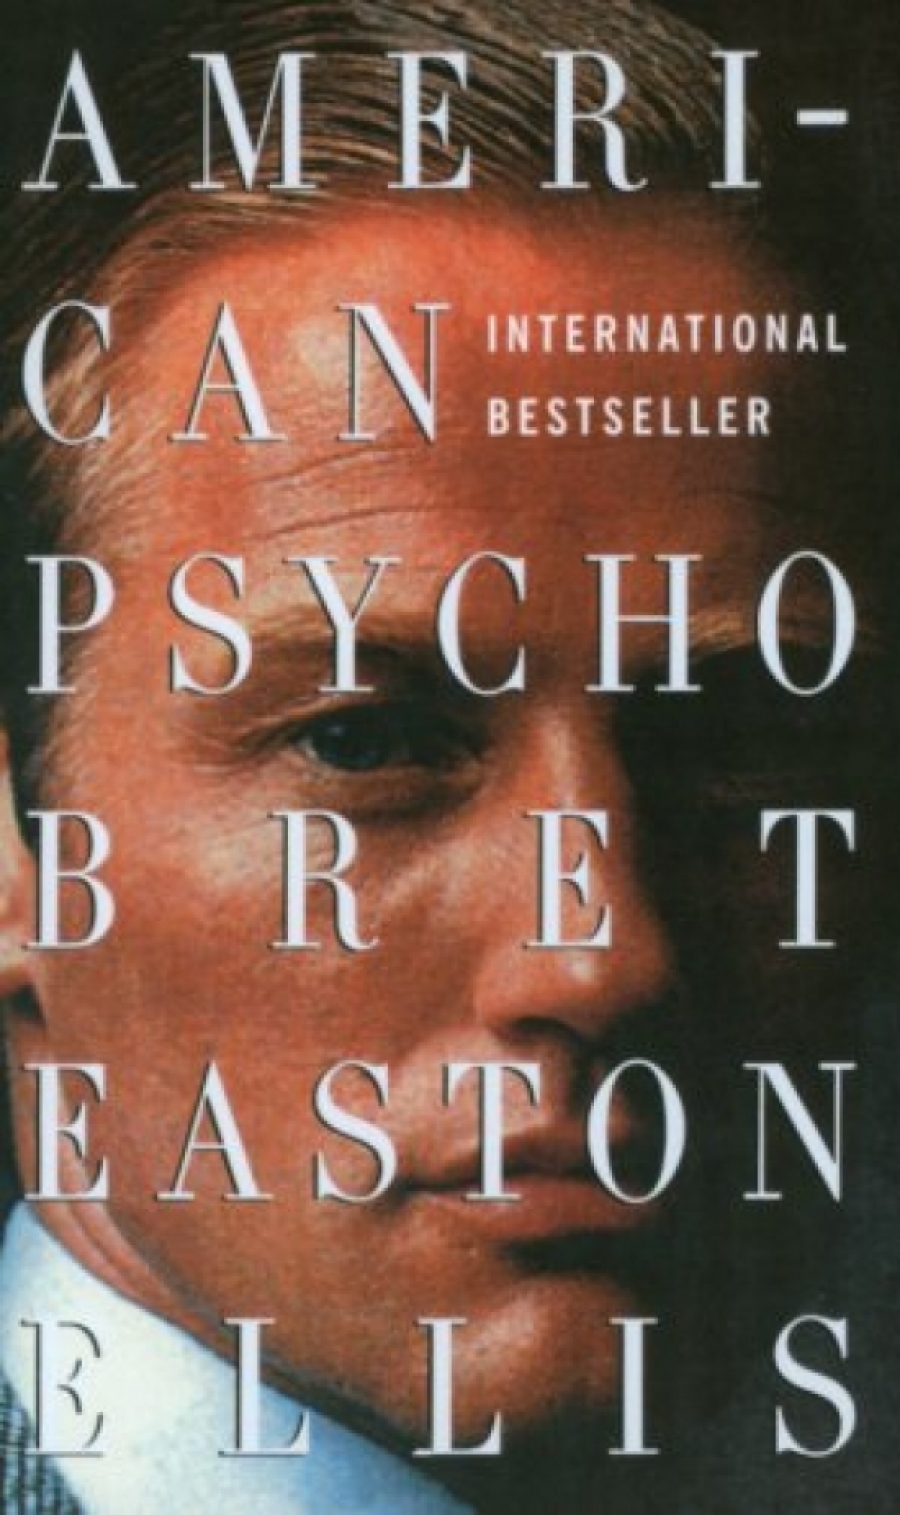 Ellis, Bret Easton American Psycho 